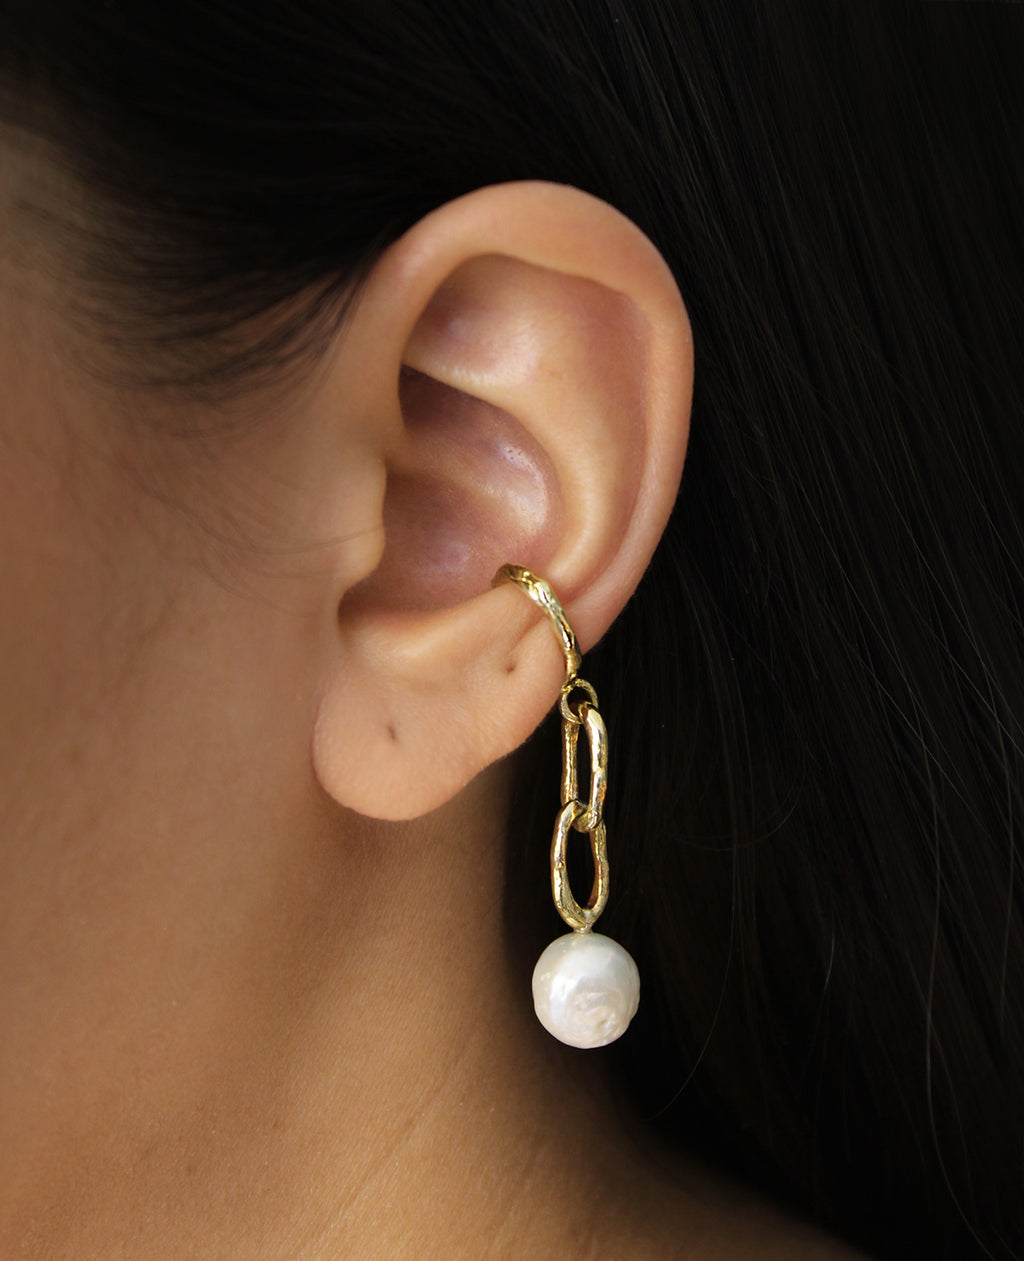 PENDULUM // golden ear cuff - ORA-C jewelry - handmade jewelry by Montreal based independent designer Caroline Pham